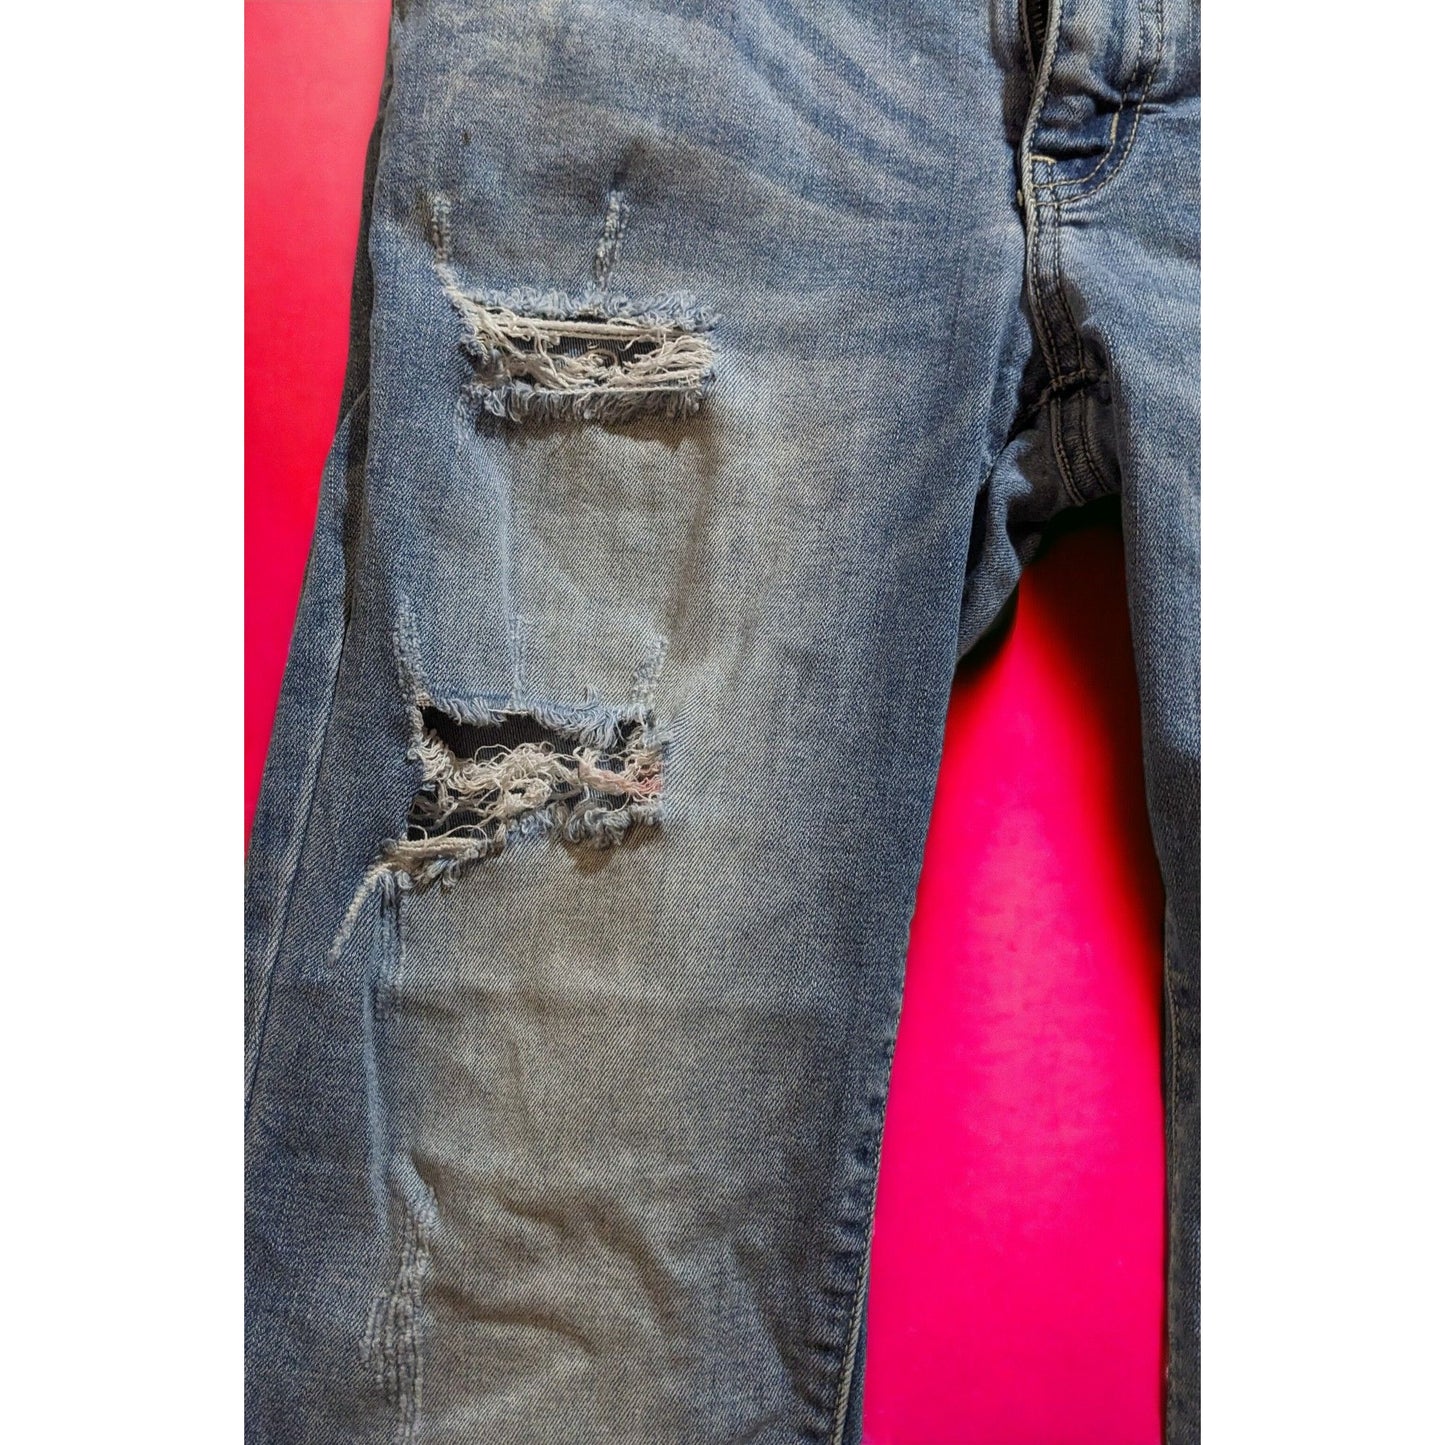 Kancan Distressed Skinny Jeans